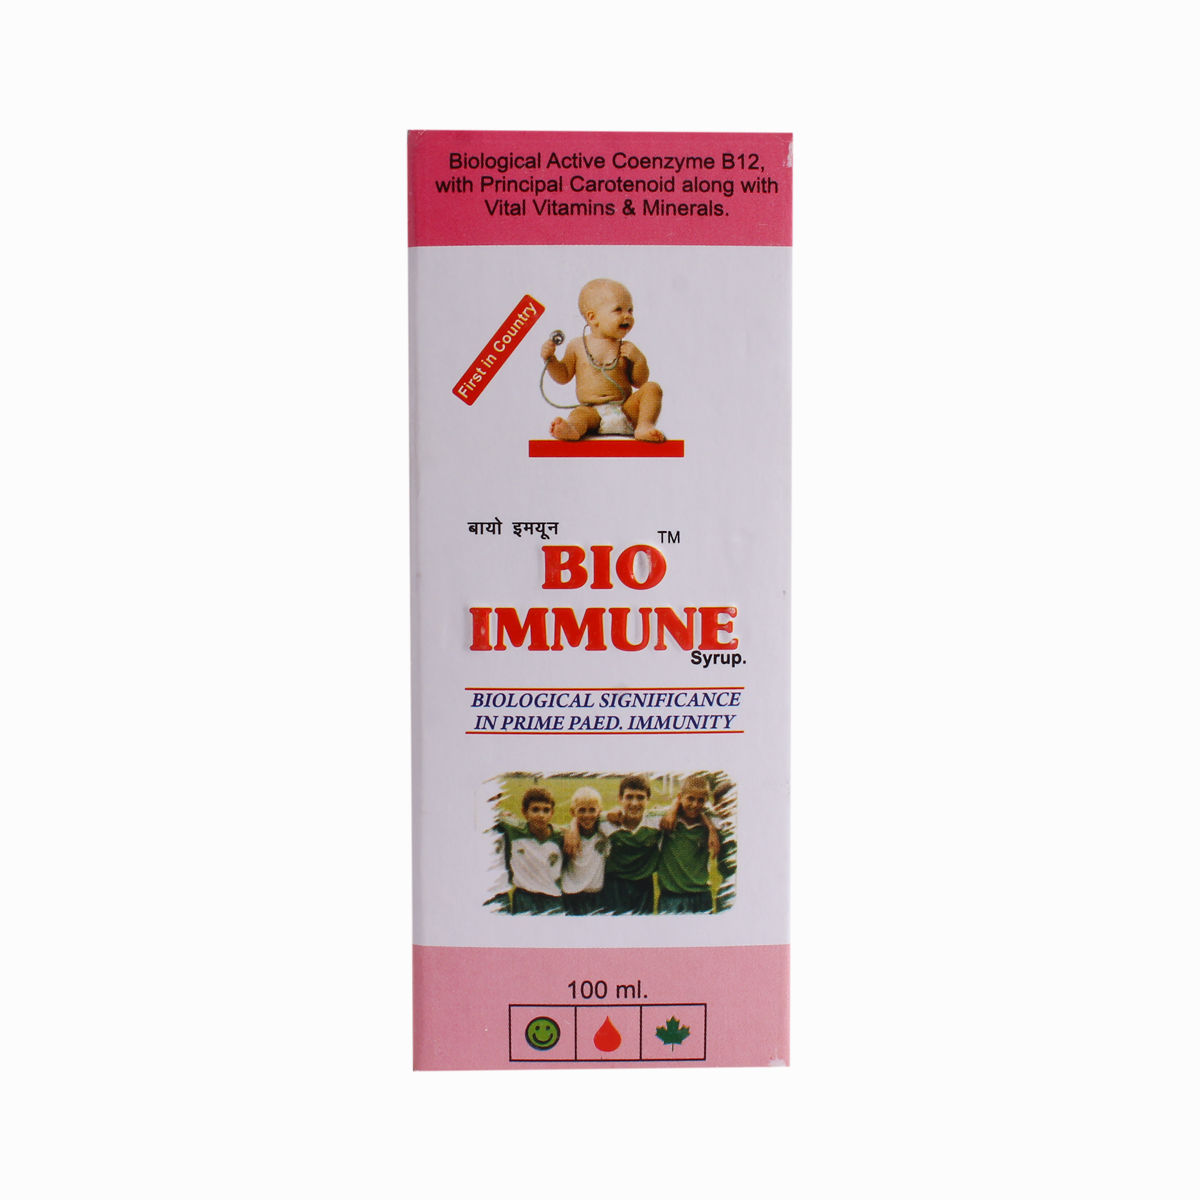 Bio Immune Syrup, 100 ml, Pack of 1 